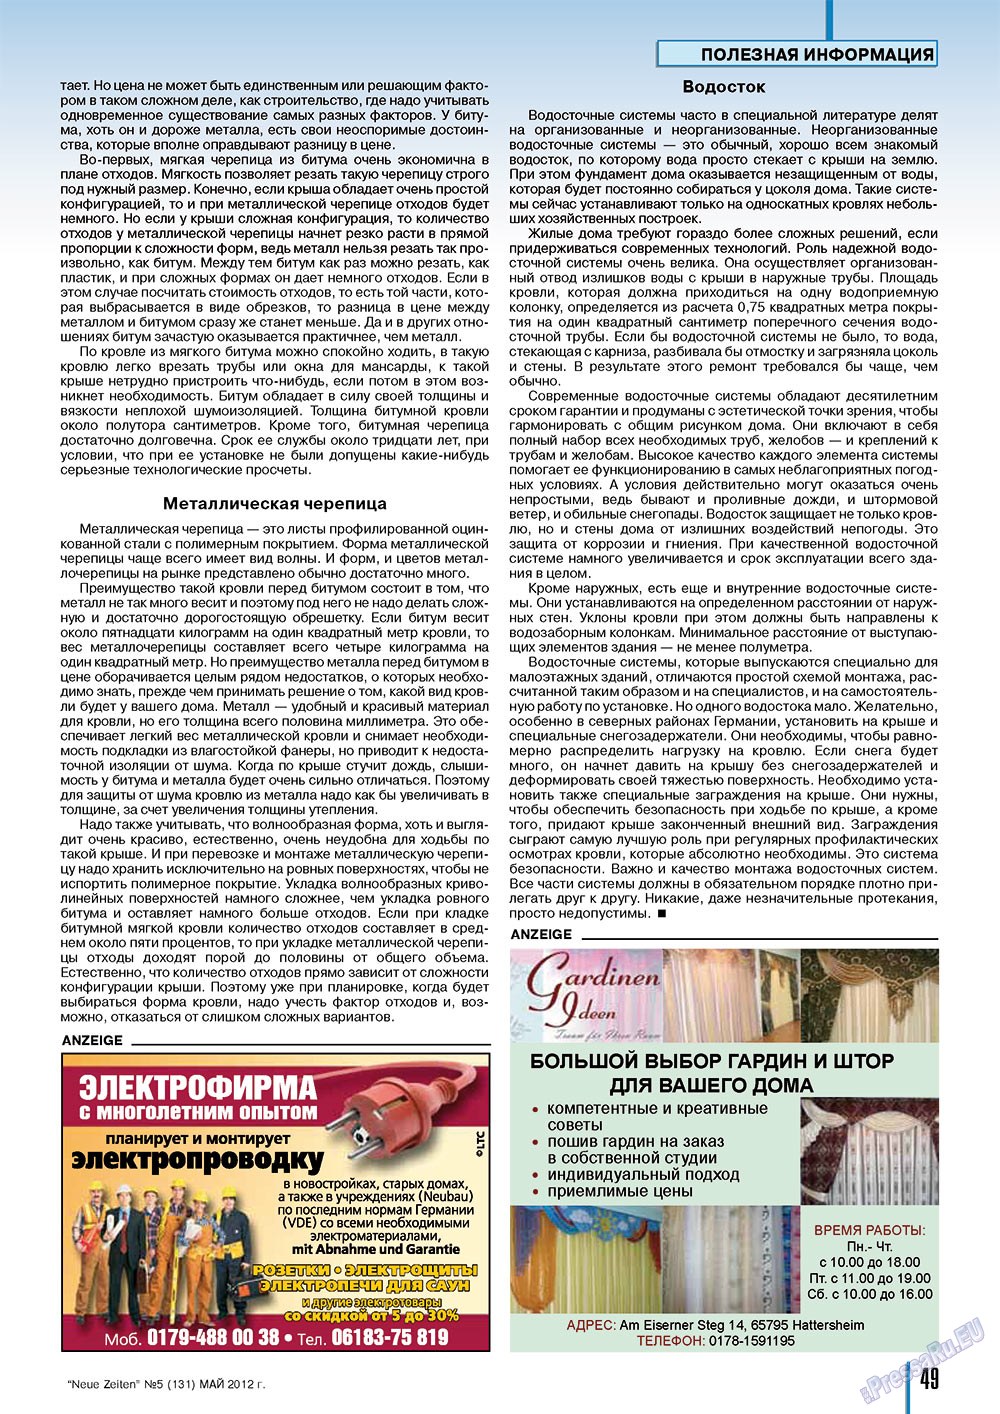 Neue Zeiten (журнал). 2012 год, номер 5, стр. 49